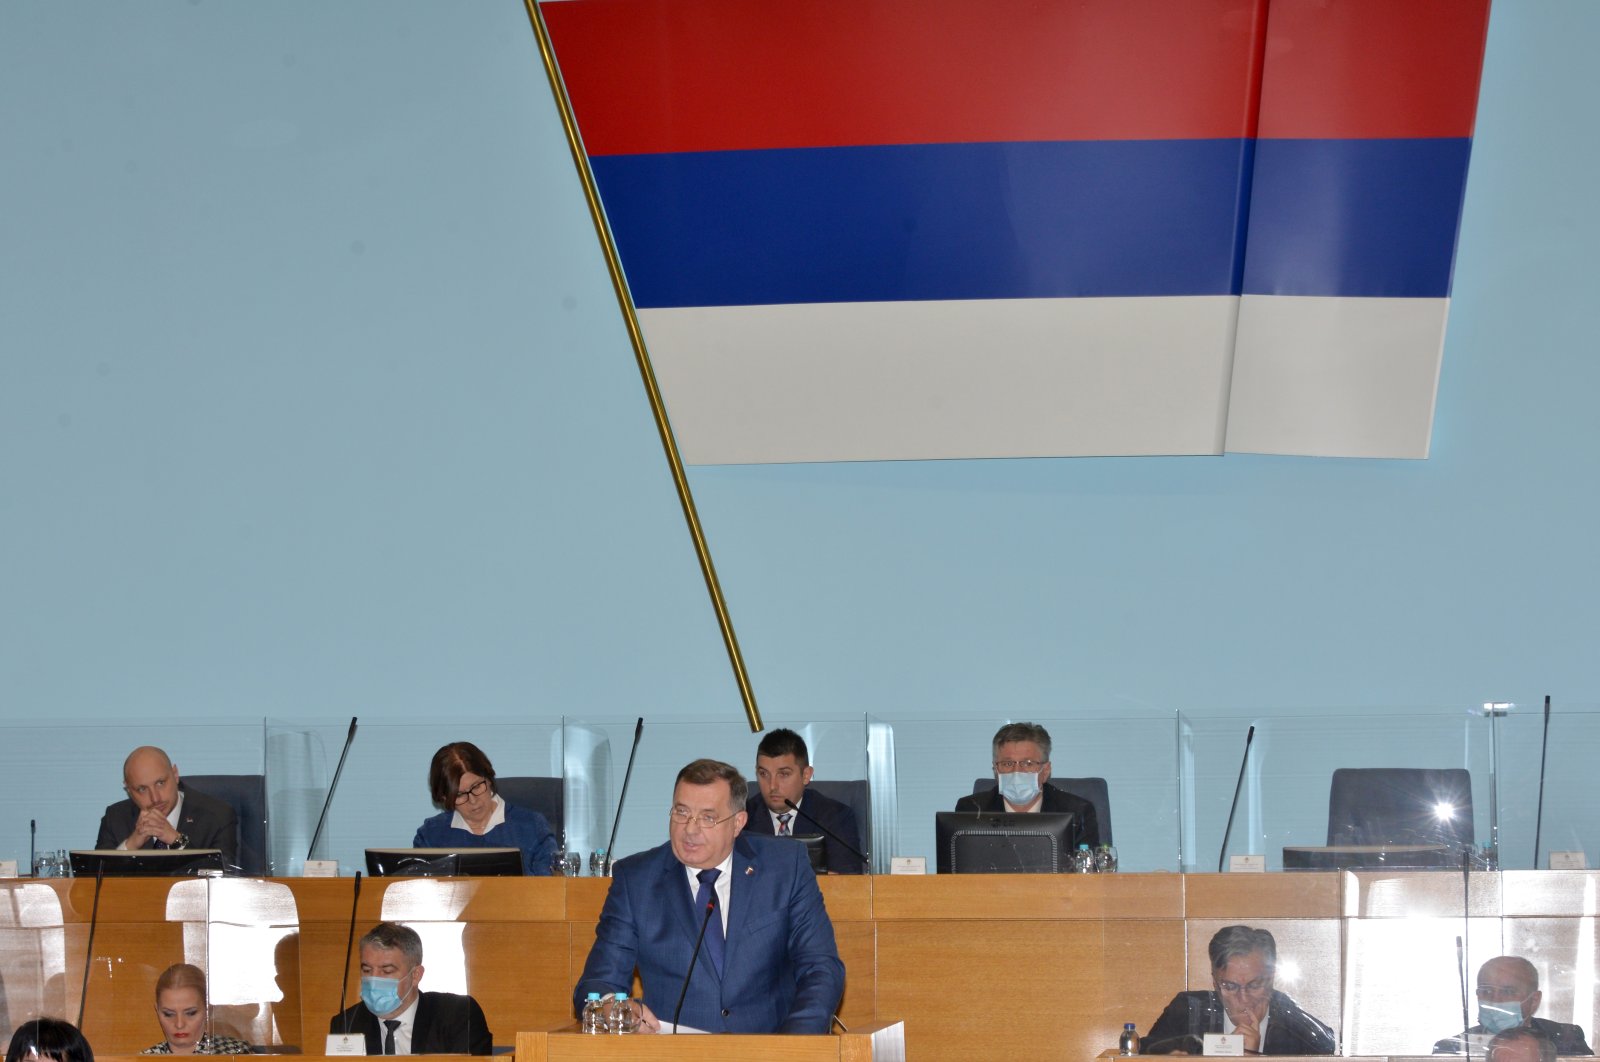 Milorad Dodik, a Bosnian Serb member of the tripartite Bosnian Presidency, speaks at a parliament session in Banja Luka, Bosnia-Herzegovina, Dec. 10, 2021. (AP Photo)